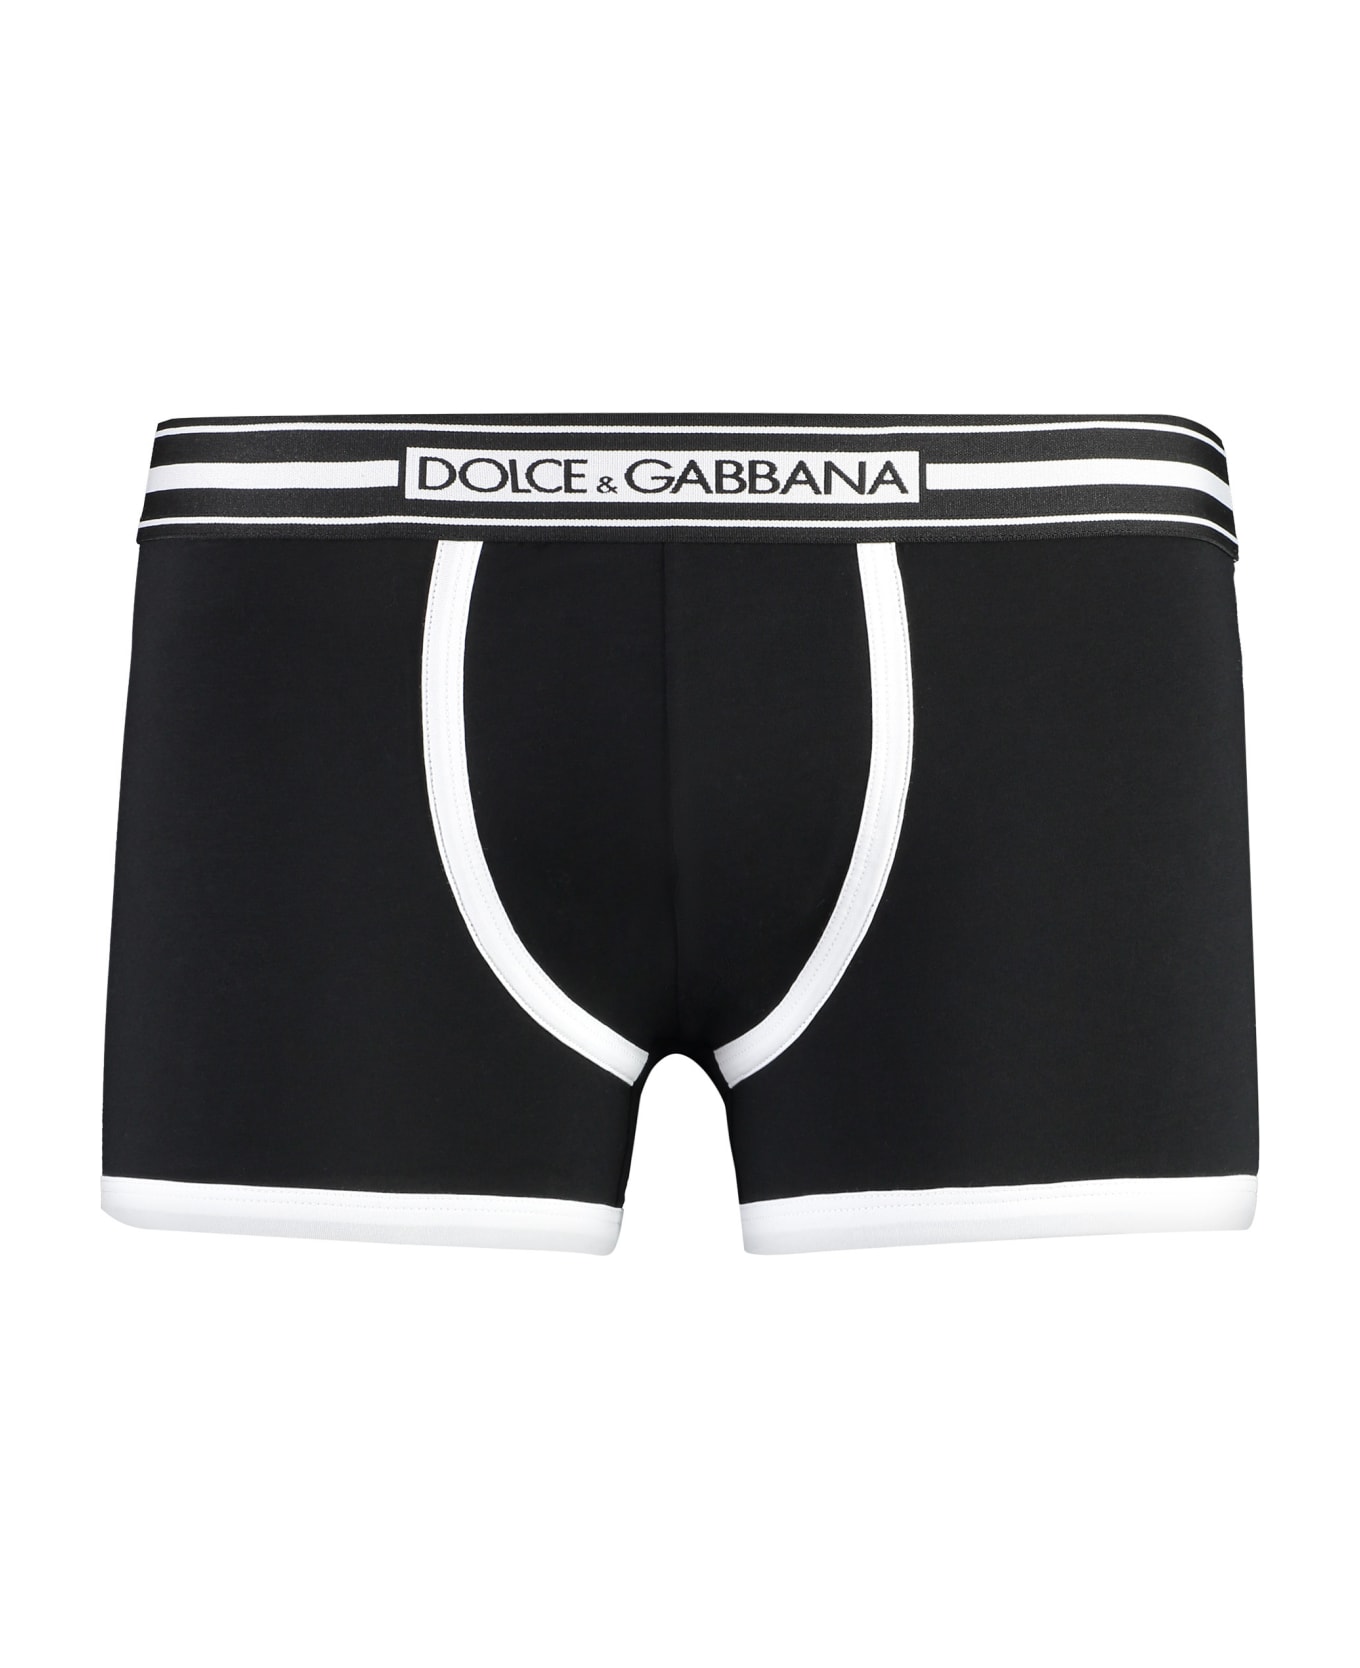 Dolce & Gabbana Logoed Elastic Band Cotton Trunks - BLACK/WHITE ショーツ